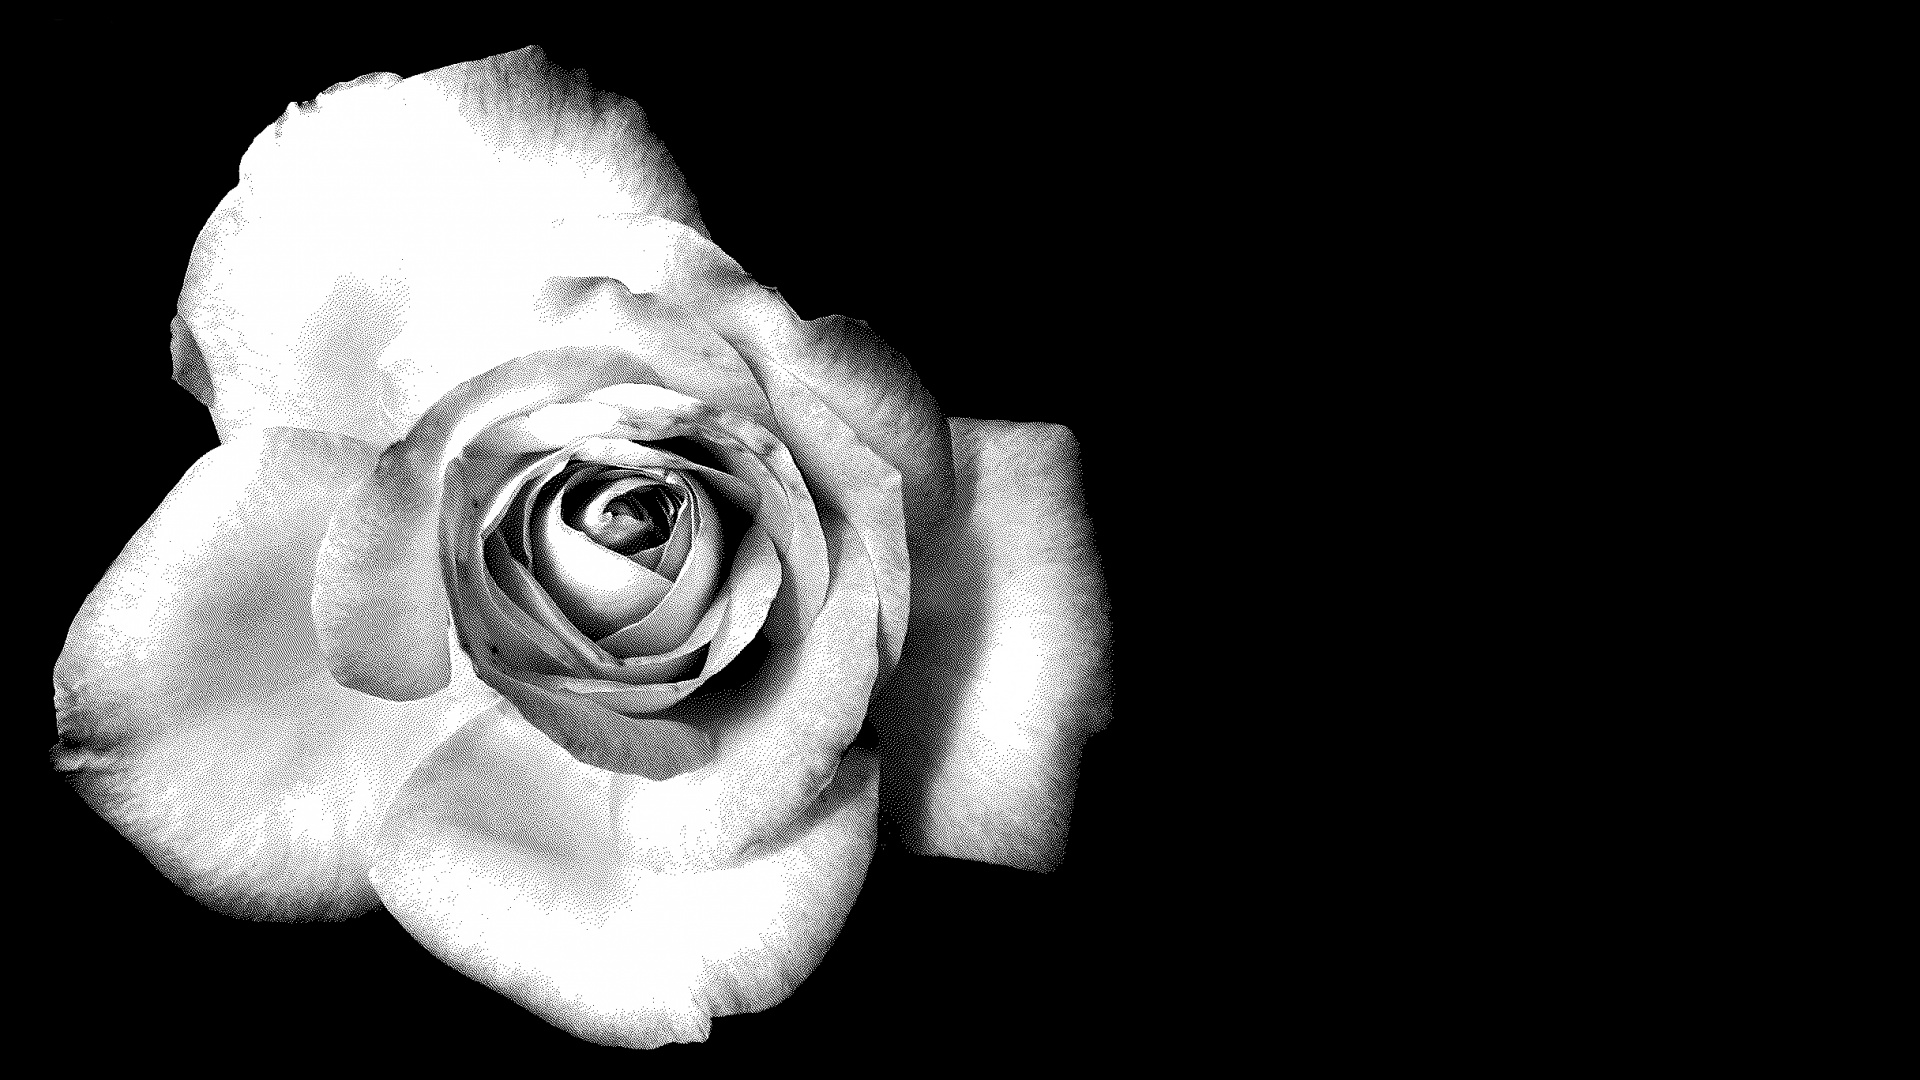 Черно-белая роза обои